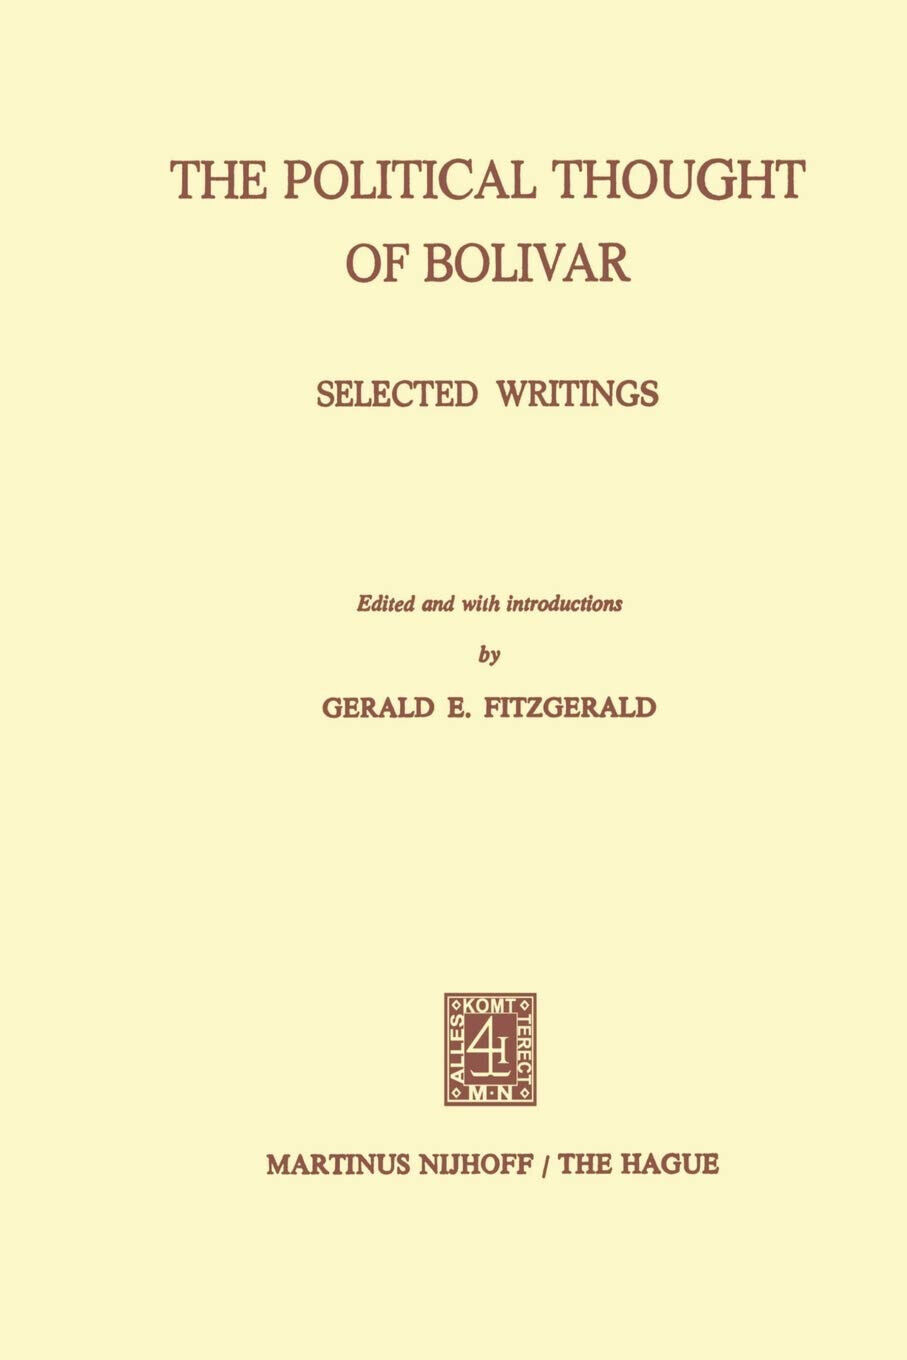 The Political Thought of Bolivar - Gerald E. Fitzgerald - Springer, 2013